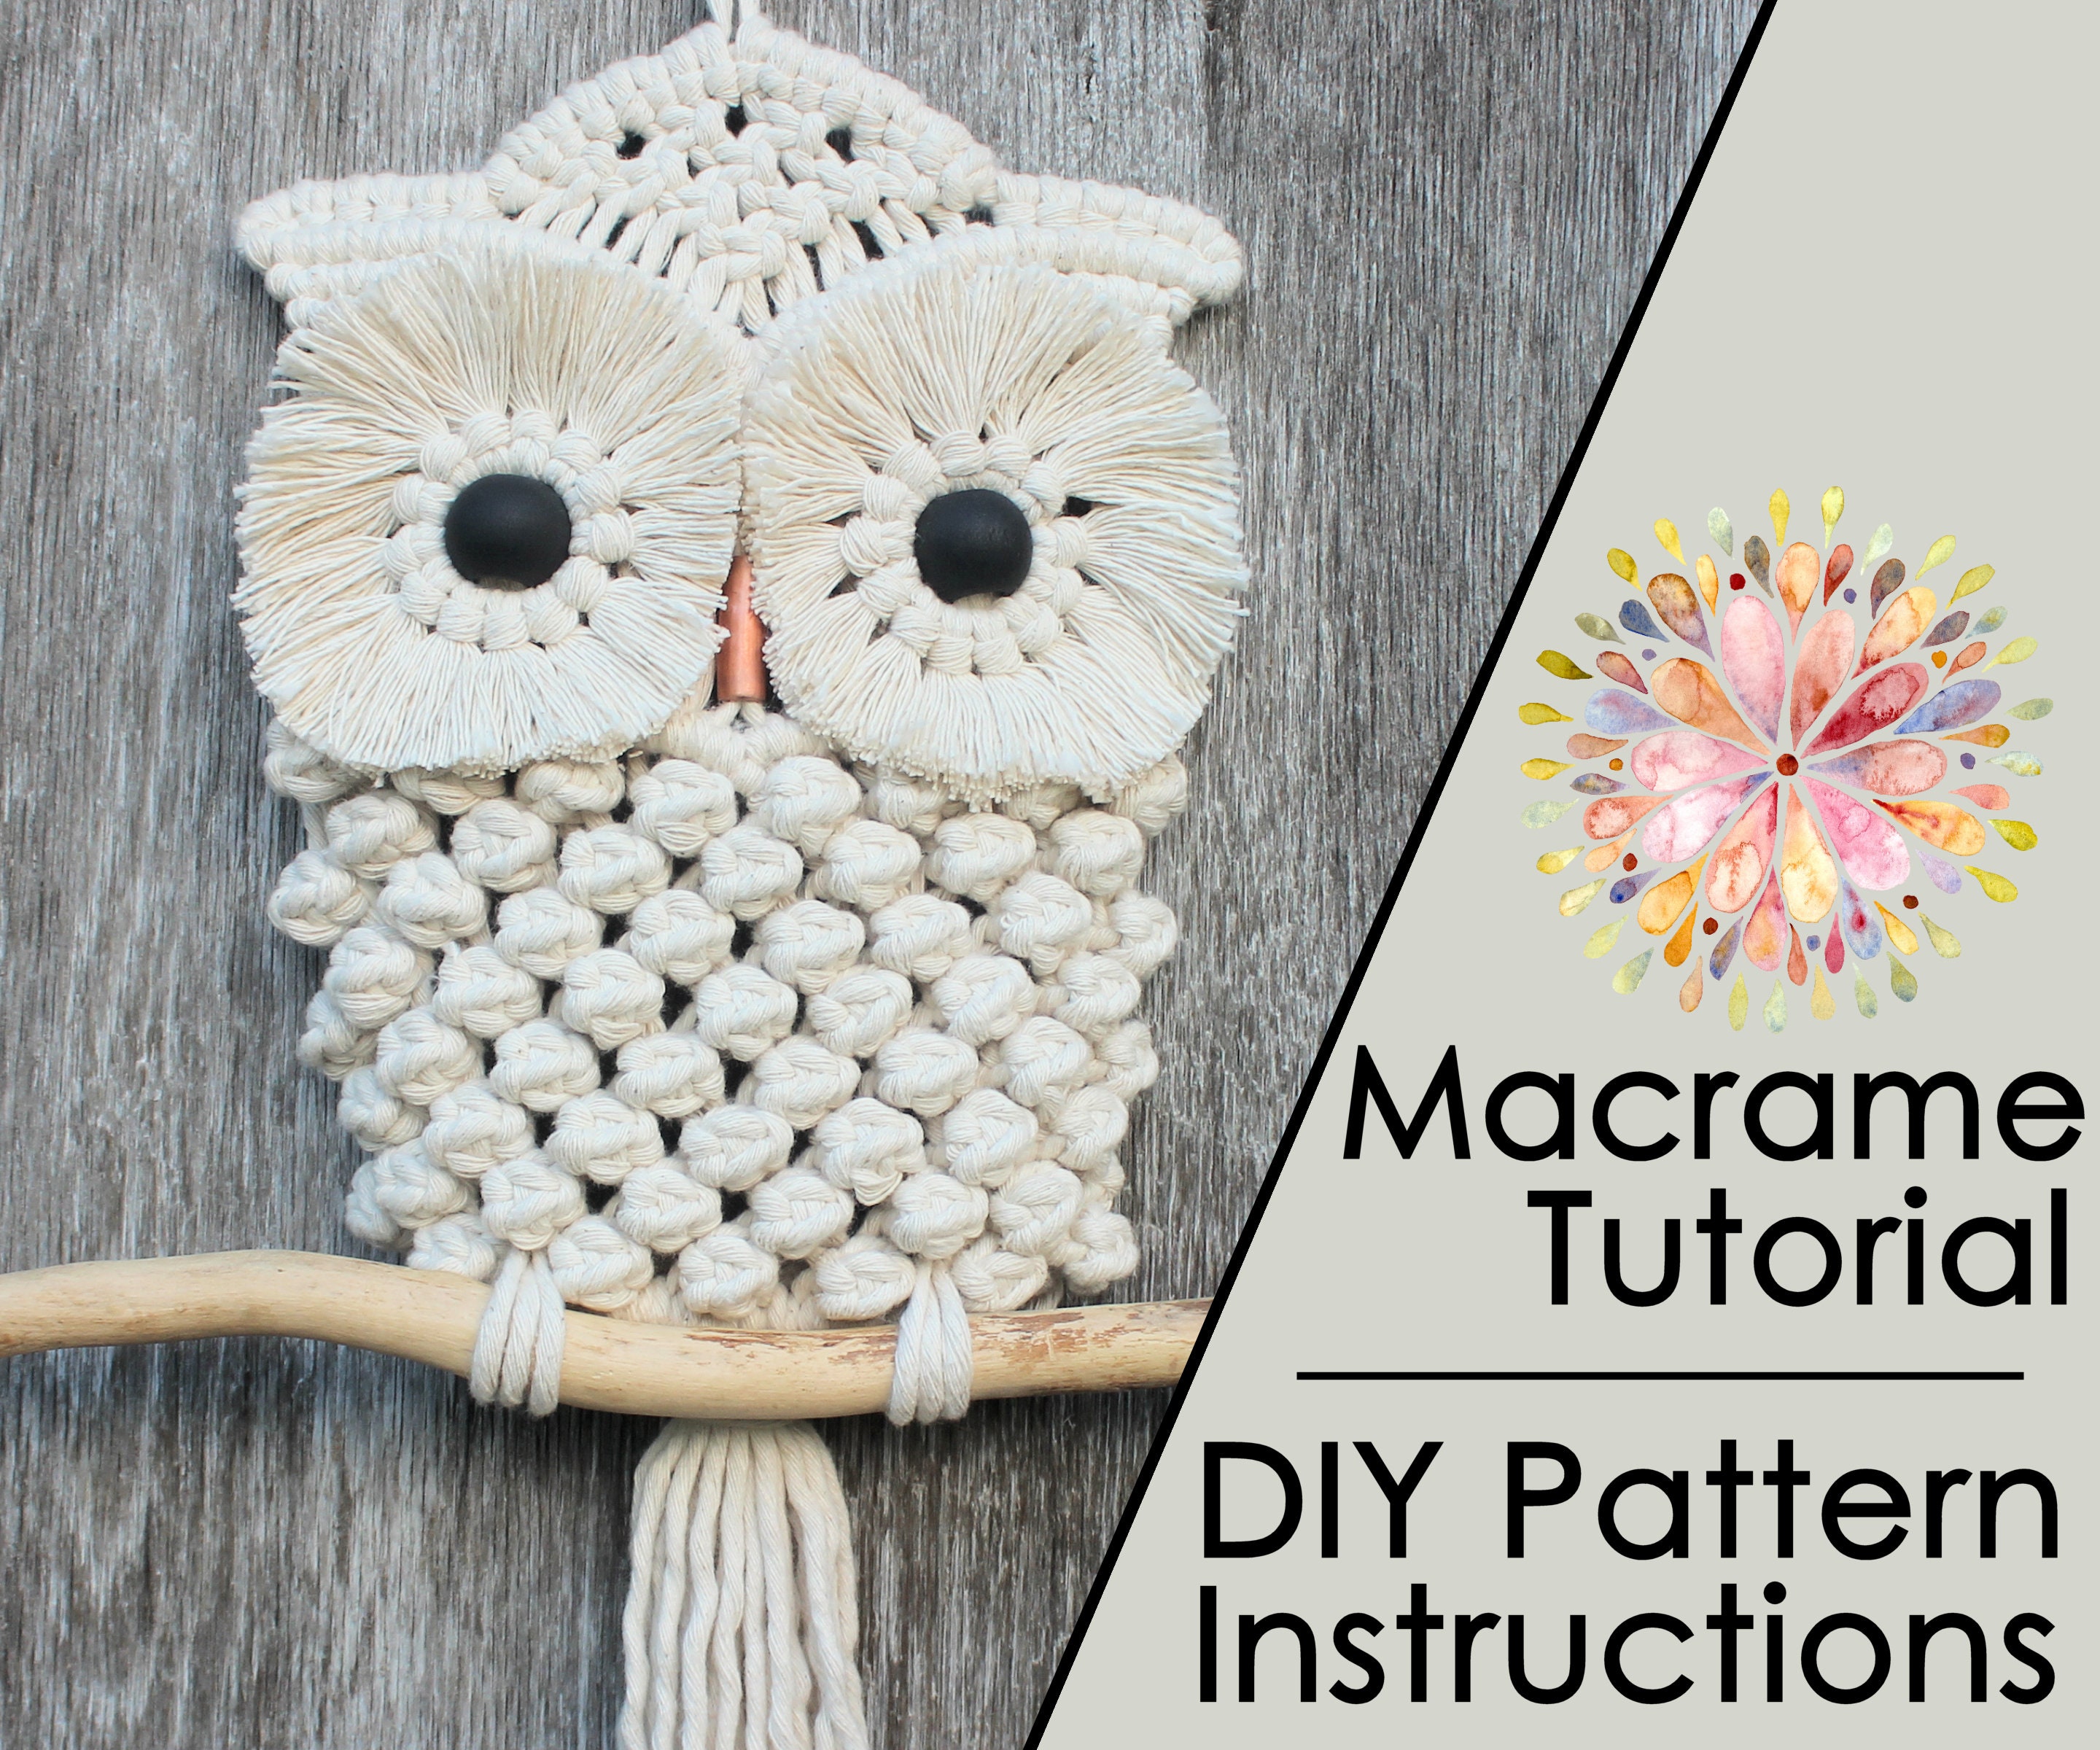 GATOKIT Pre-Cut Macrame Kit for Adults Beginners, DIY Macrame Owl Keychain Kits with Unique Craft Design (2 Pcs Owl Keychain (White+Beige))